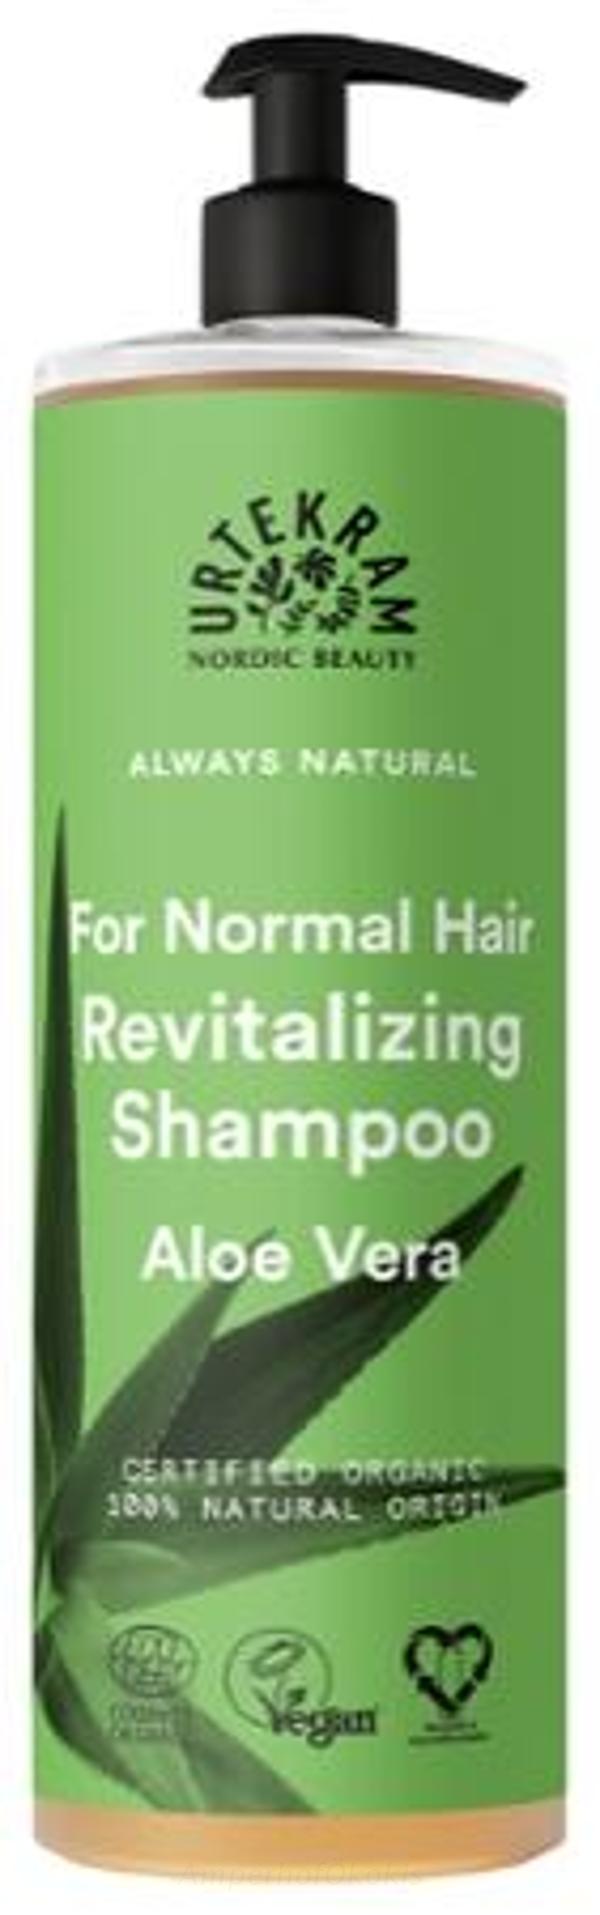 Produktfoto zu Shampoo Aloe Vera 1 l